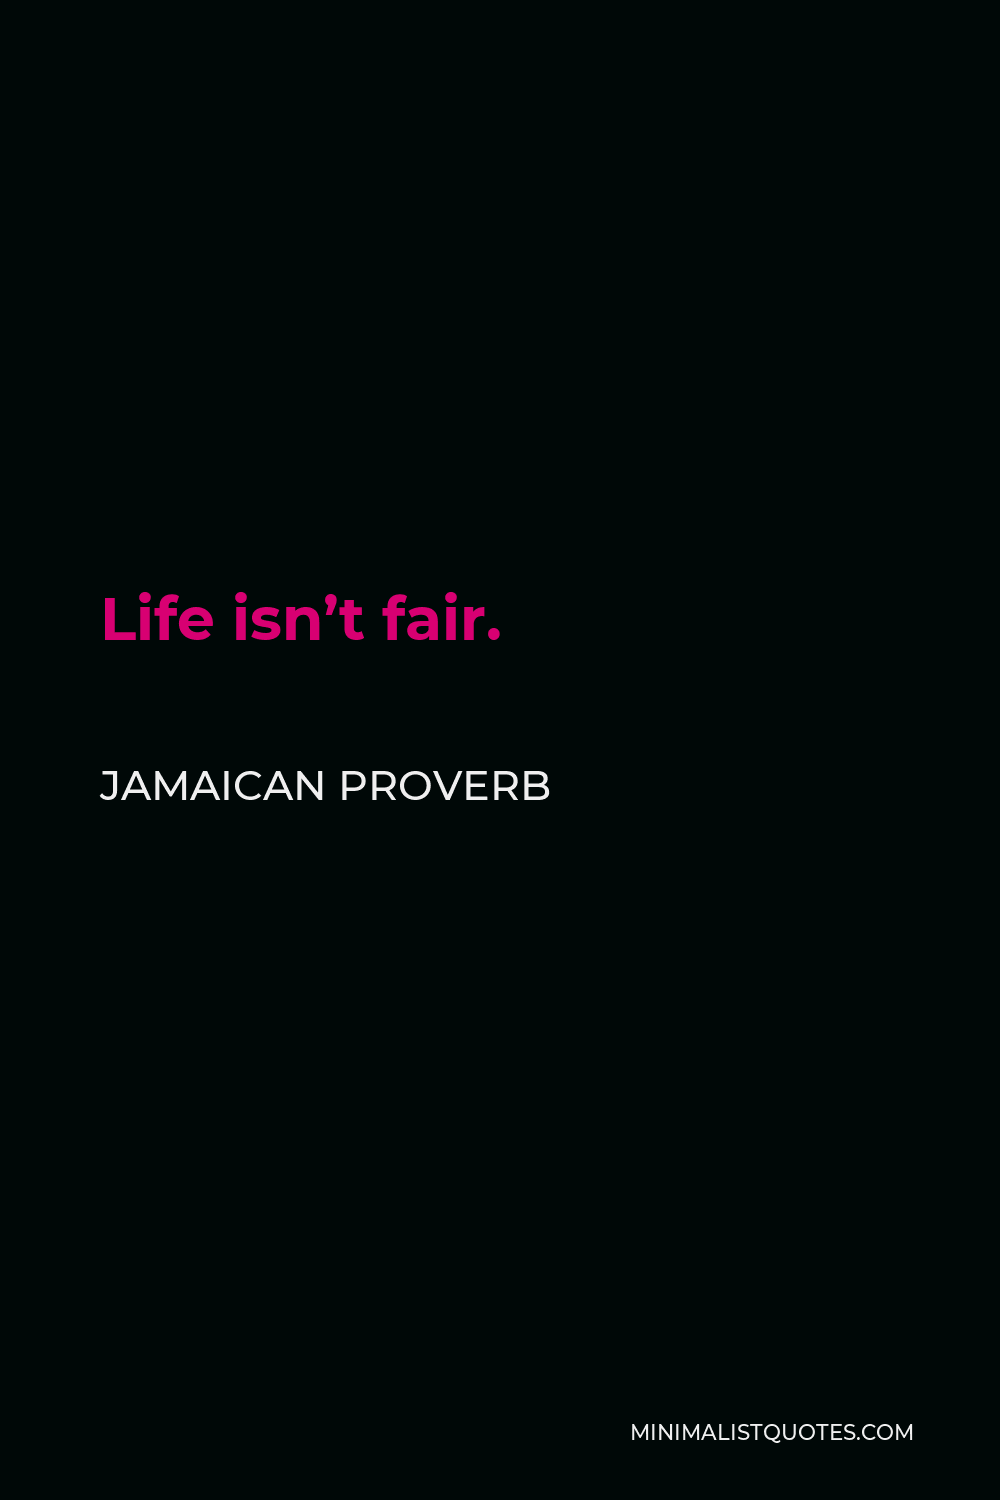 Jamaican Proverb Quote - Life isn’t fair.